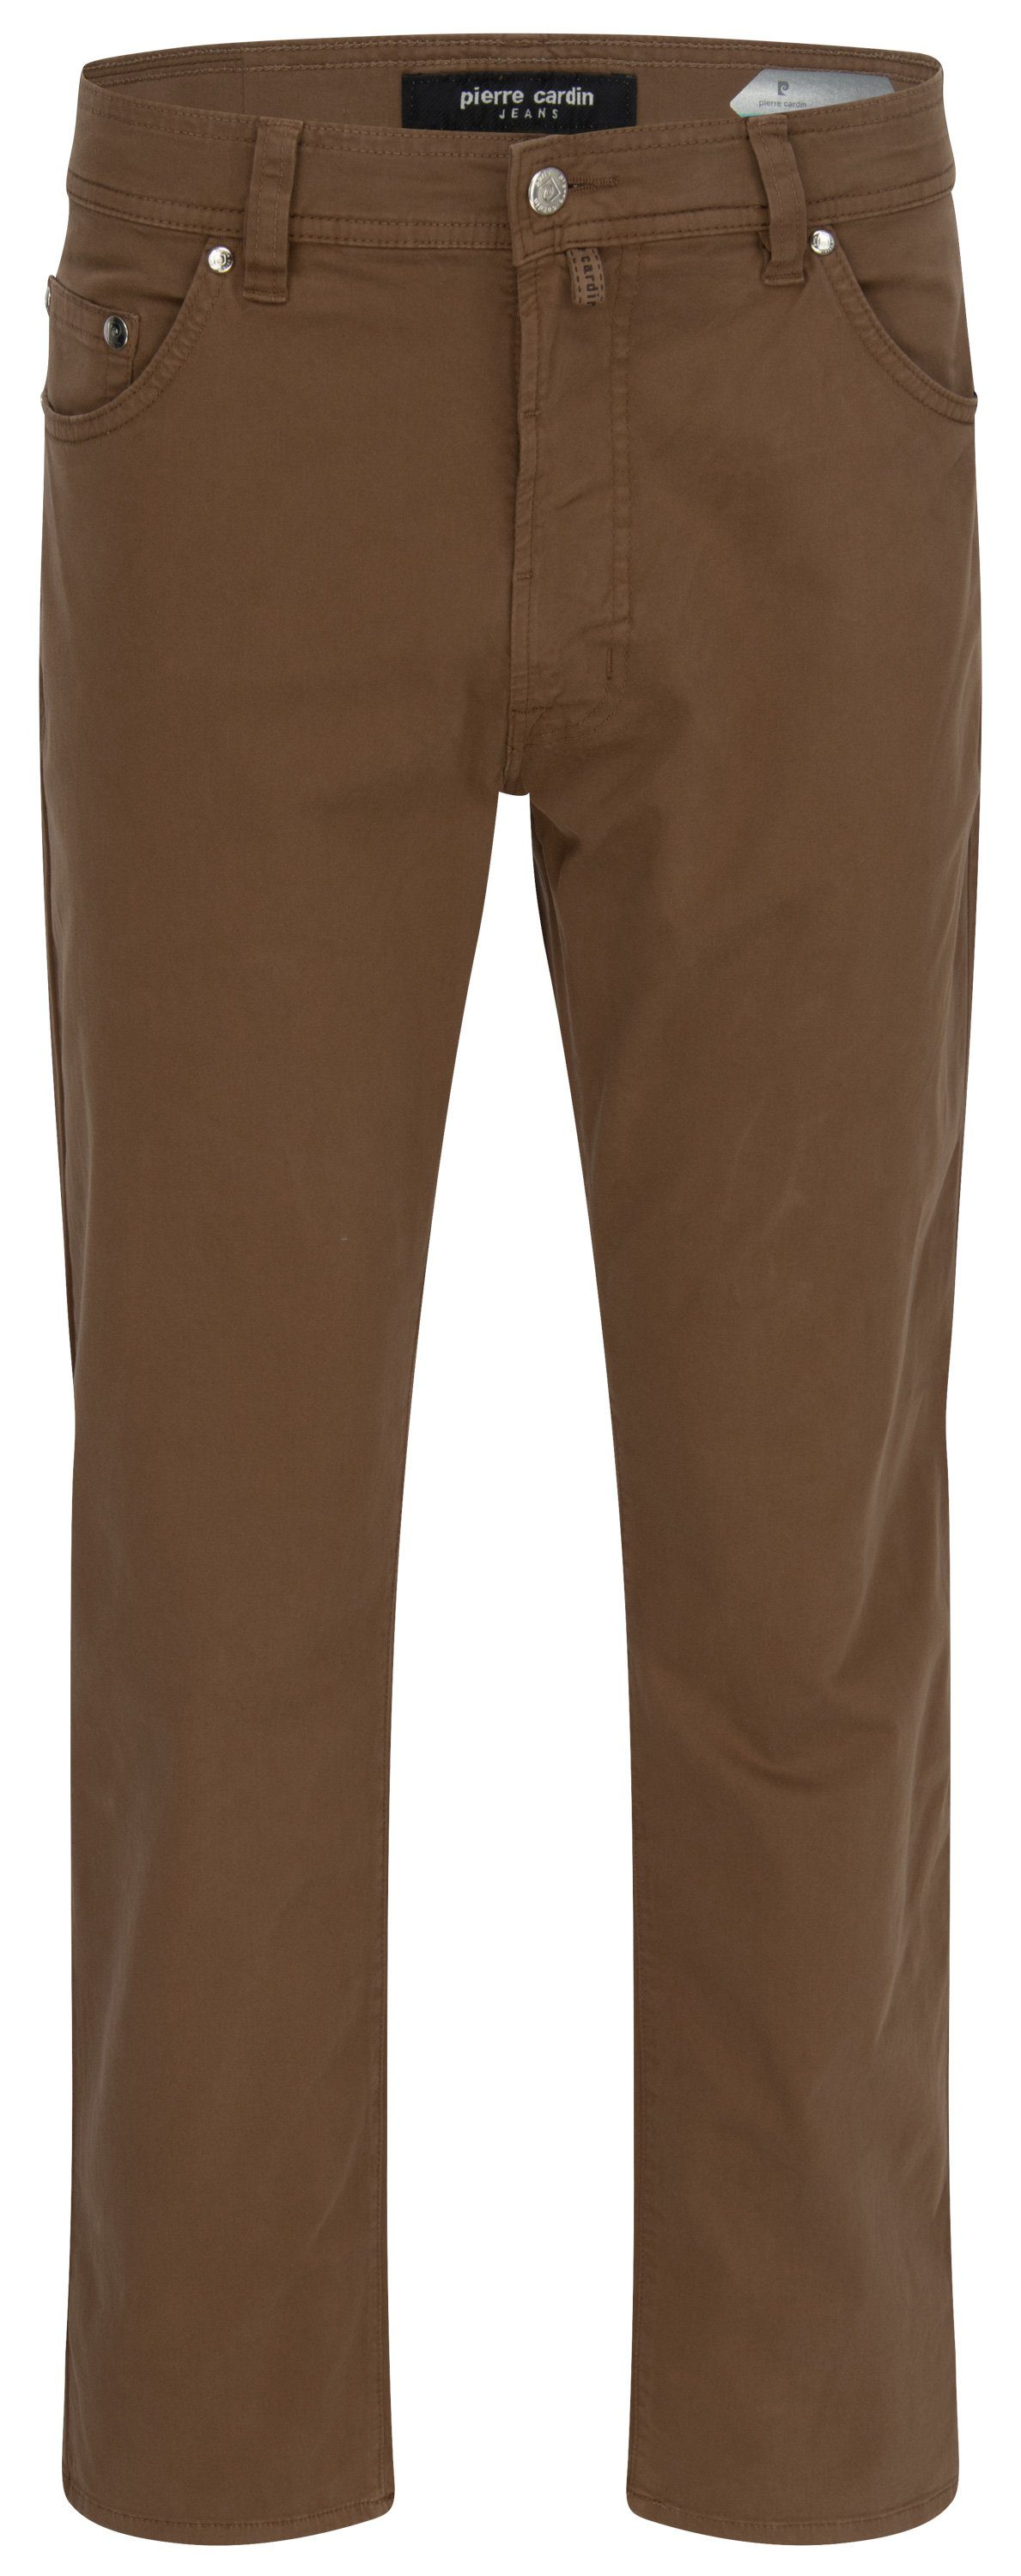 Pierre Cardin 5-Pocket-Jeans PIERRE CARDIN DEAUVILLE brownish 31961 2500.70 - Performance Plus